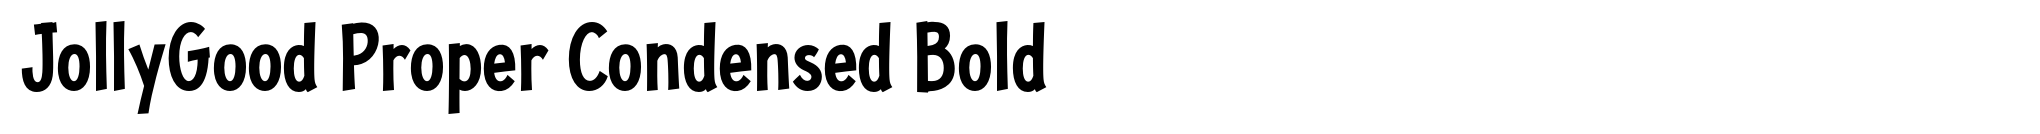 JollyGood Proper Condensed Bold image